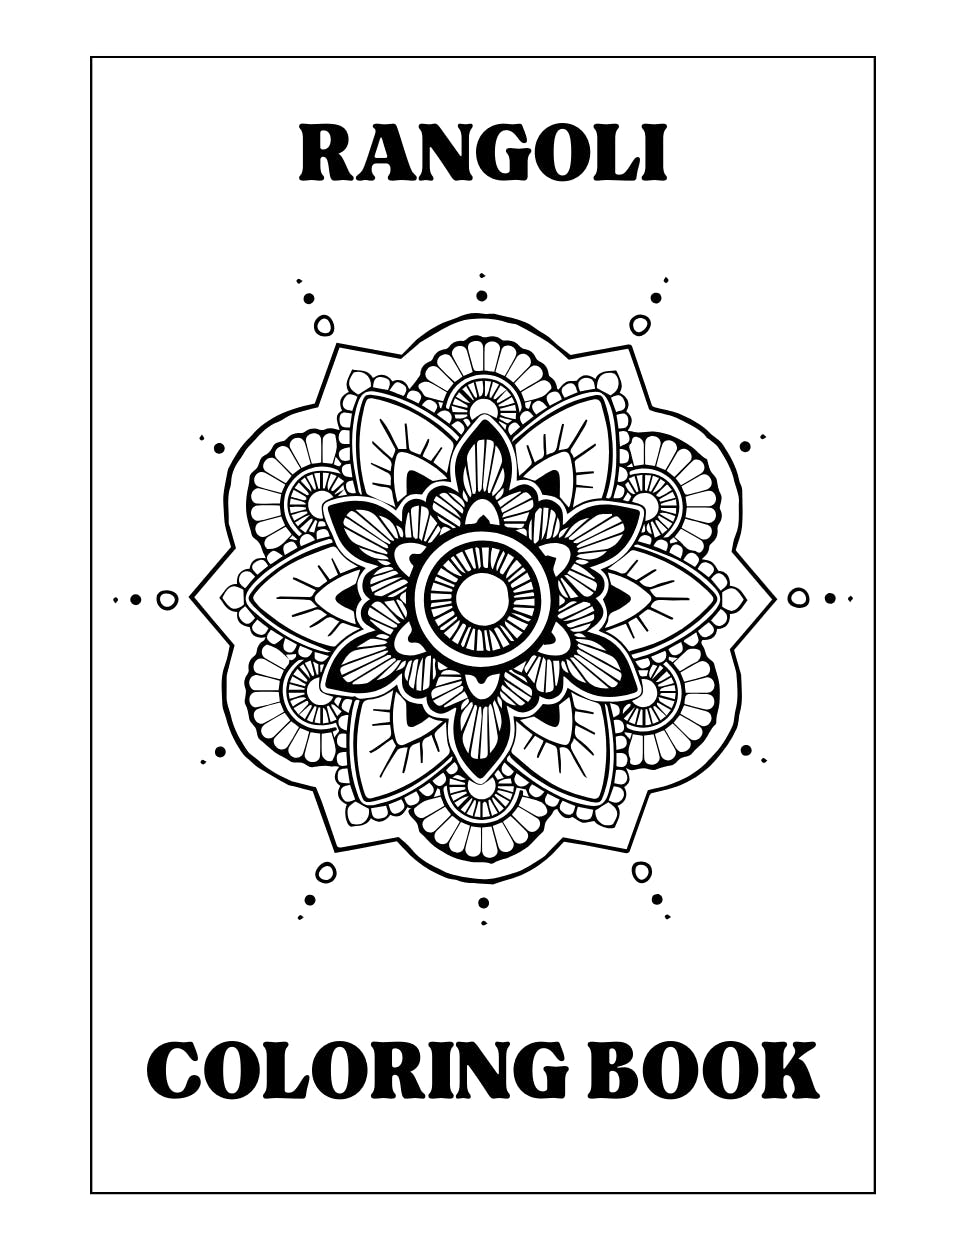 Rangoli Coloring Book